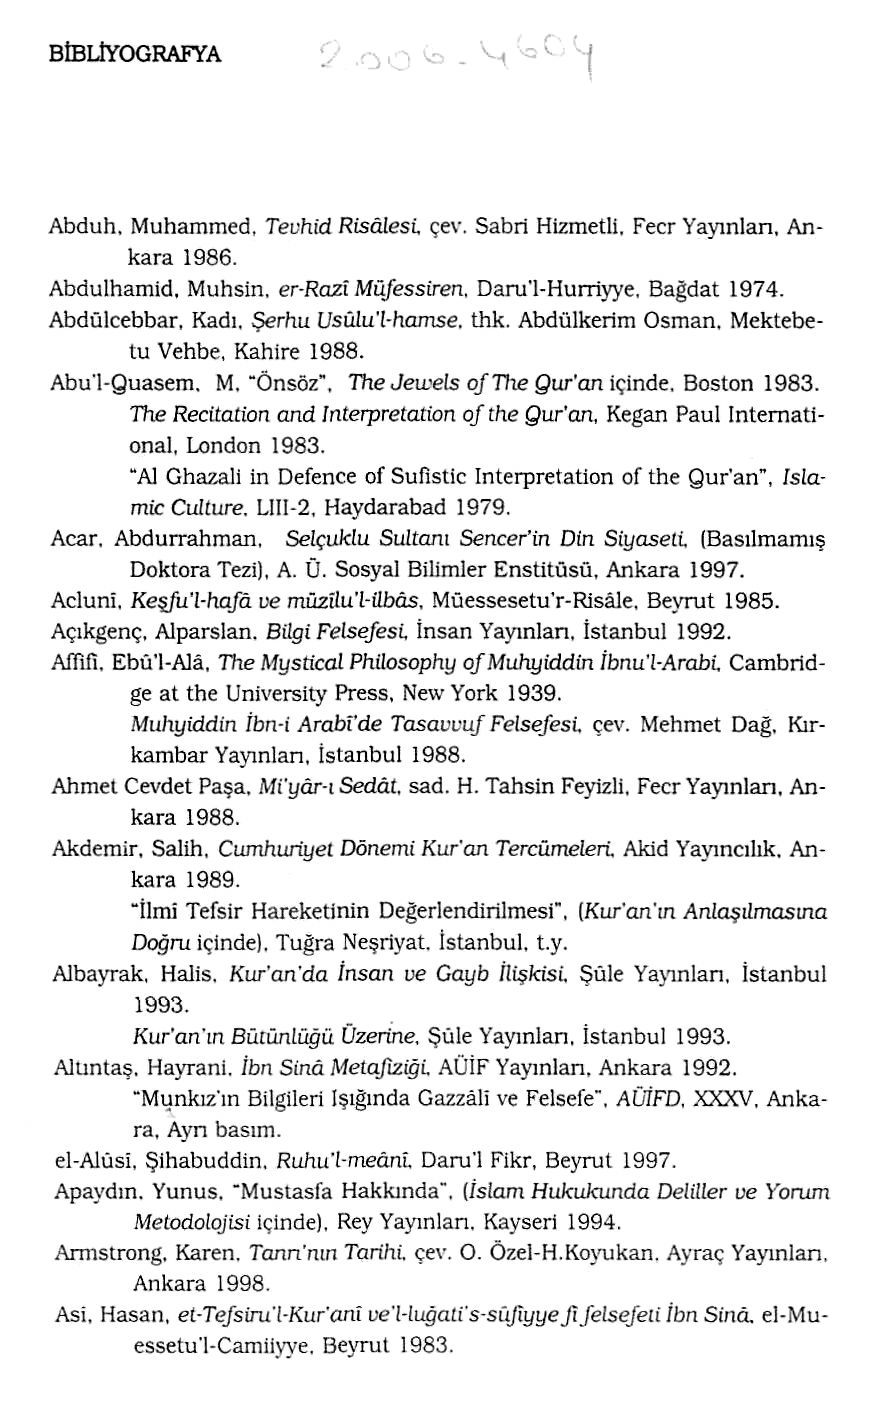 BİBLİYOGRAFYA Abduh, Muhammed, Tevhid Risalesi çev. Sabri Hizmetli. Fecr Yayınlan, Ankara 1986. Abdulhamid, Muhsin. er-razi Müfessiren, Daru'l-Hurriyye, Bağdat 1974.